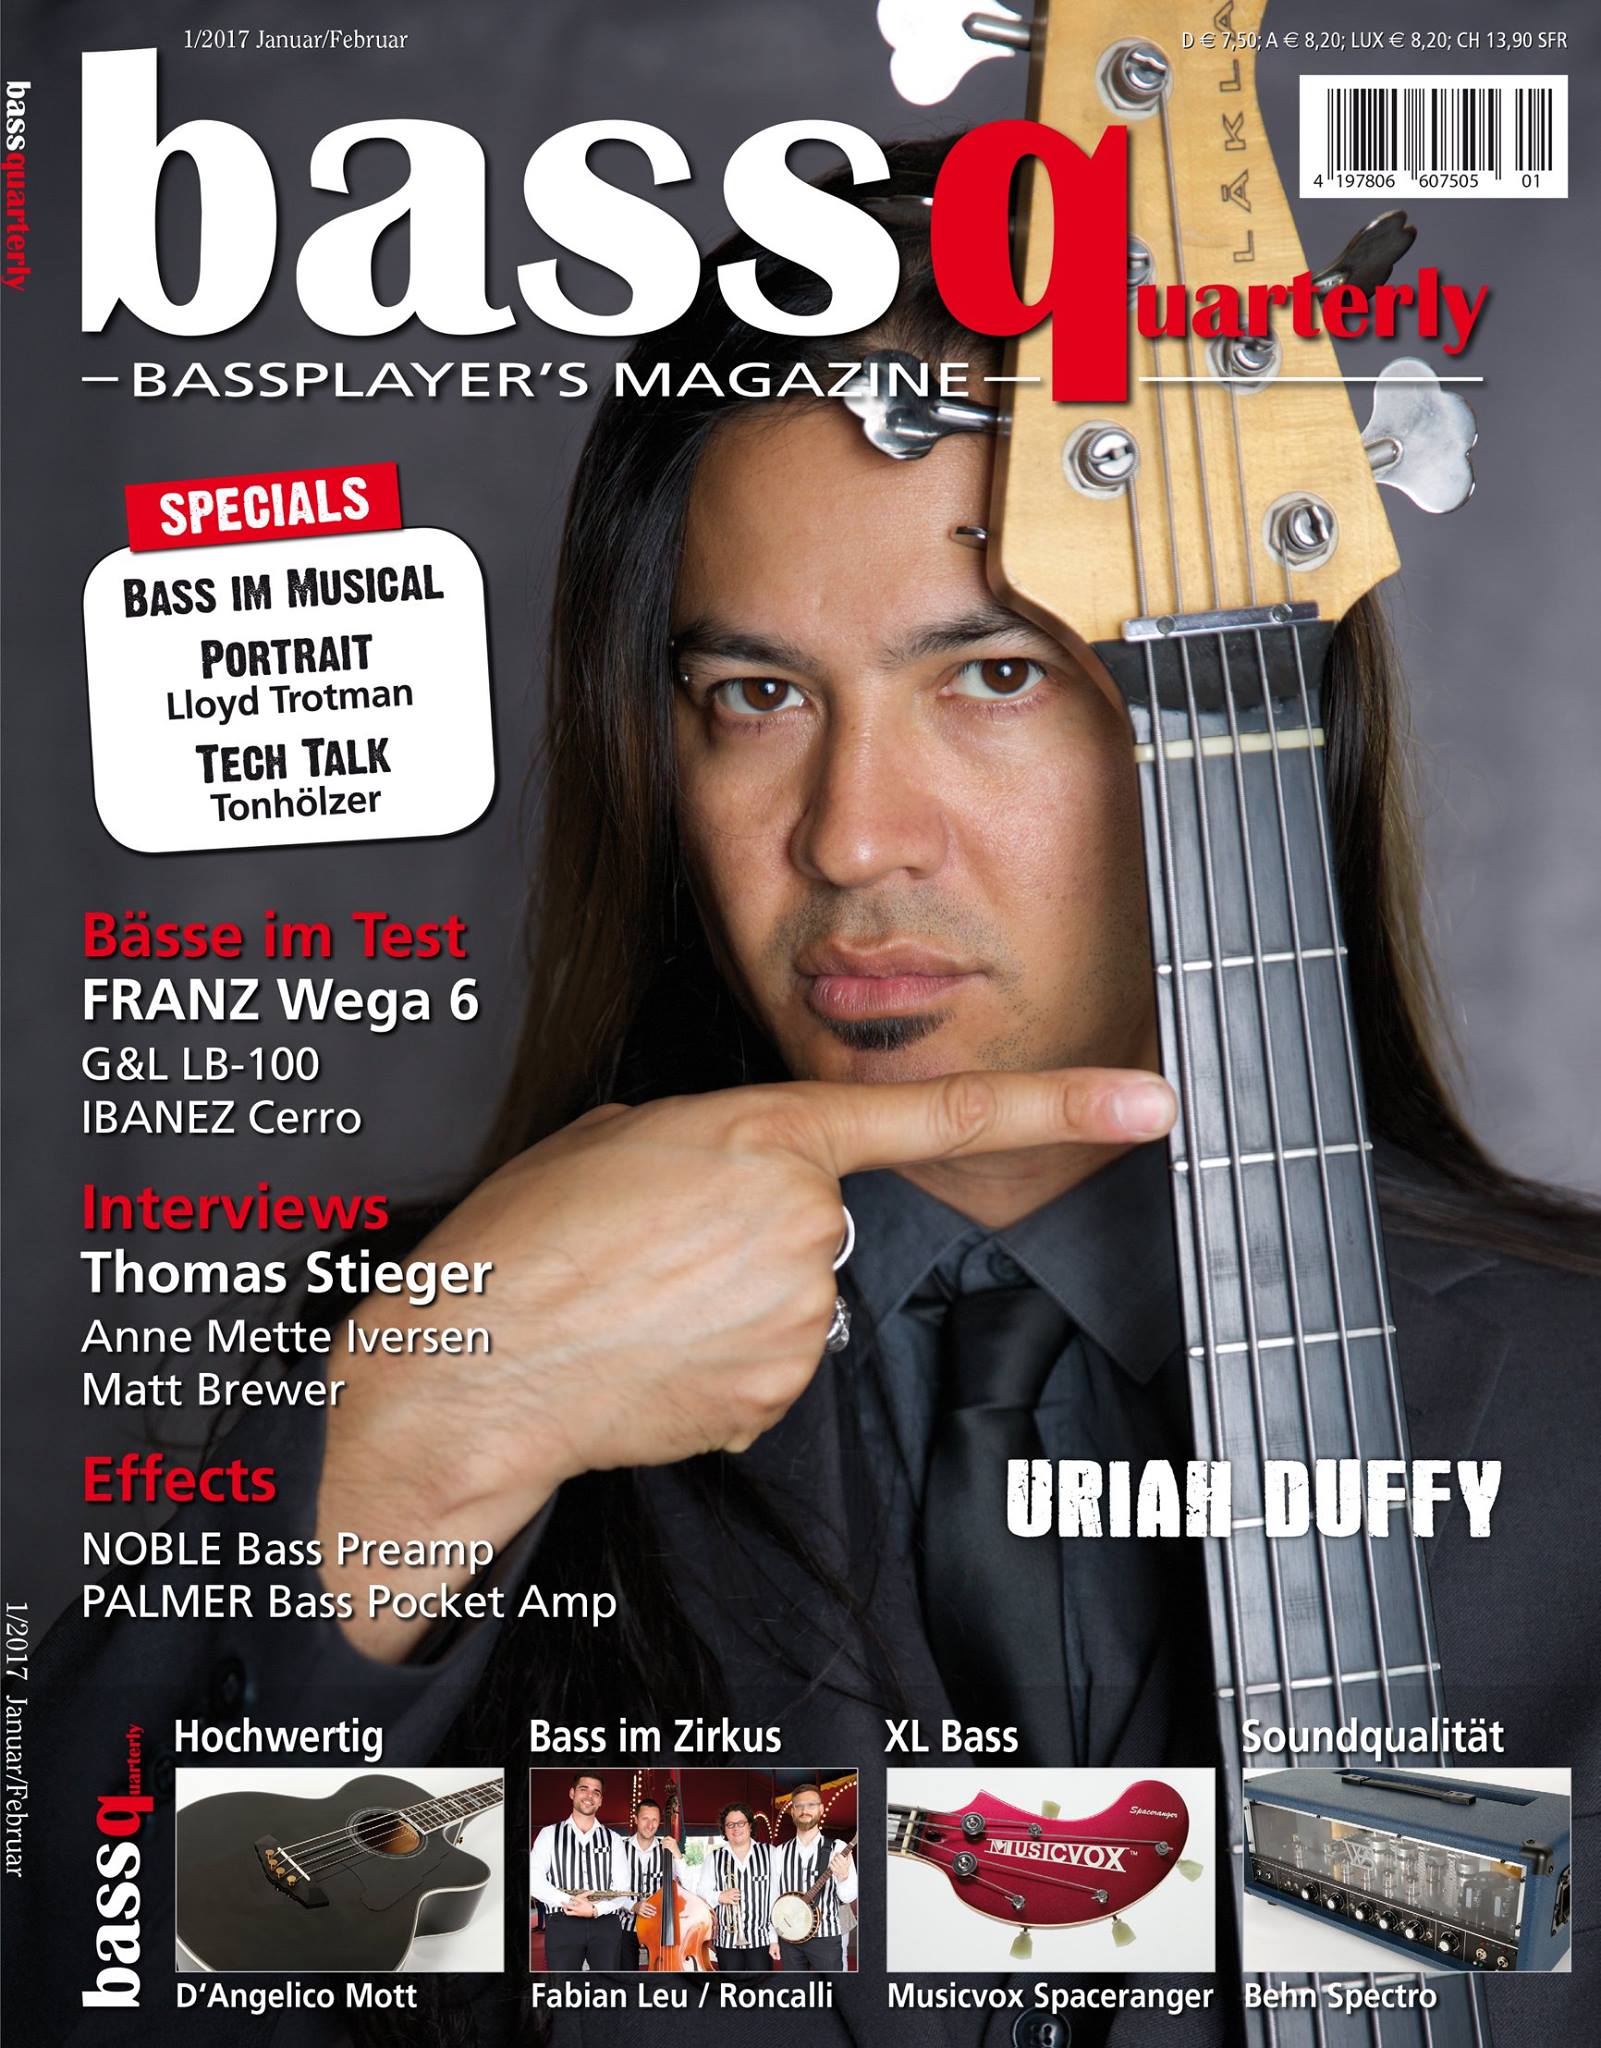 Bass Quarterly